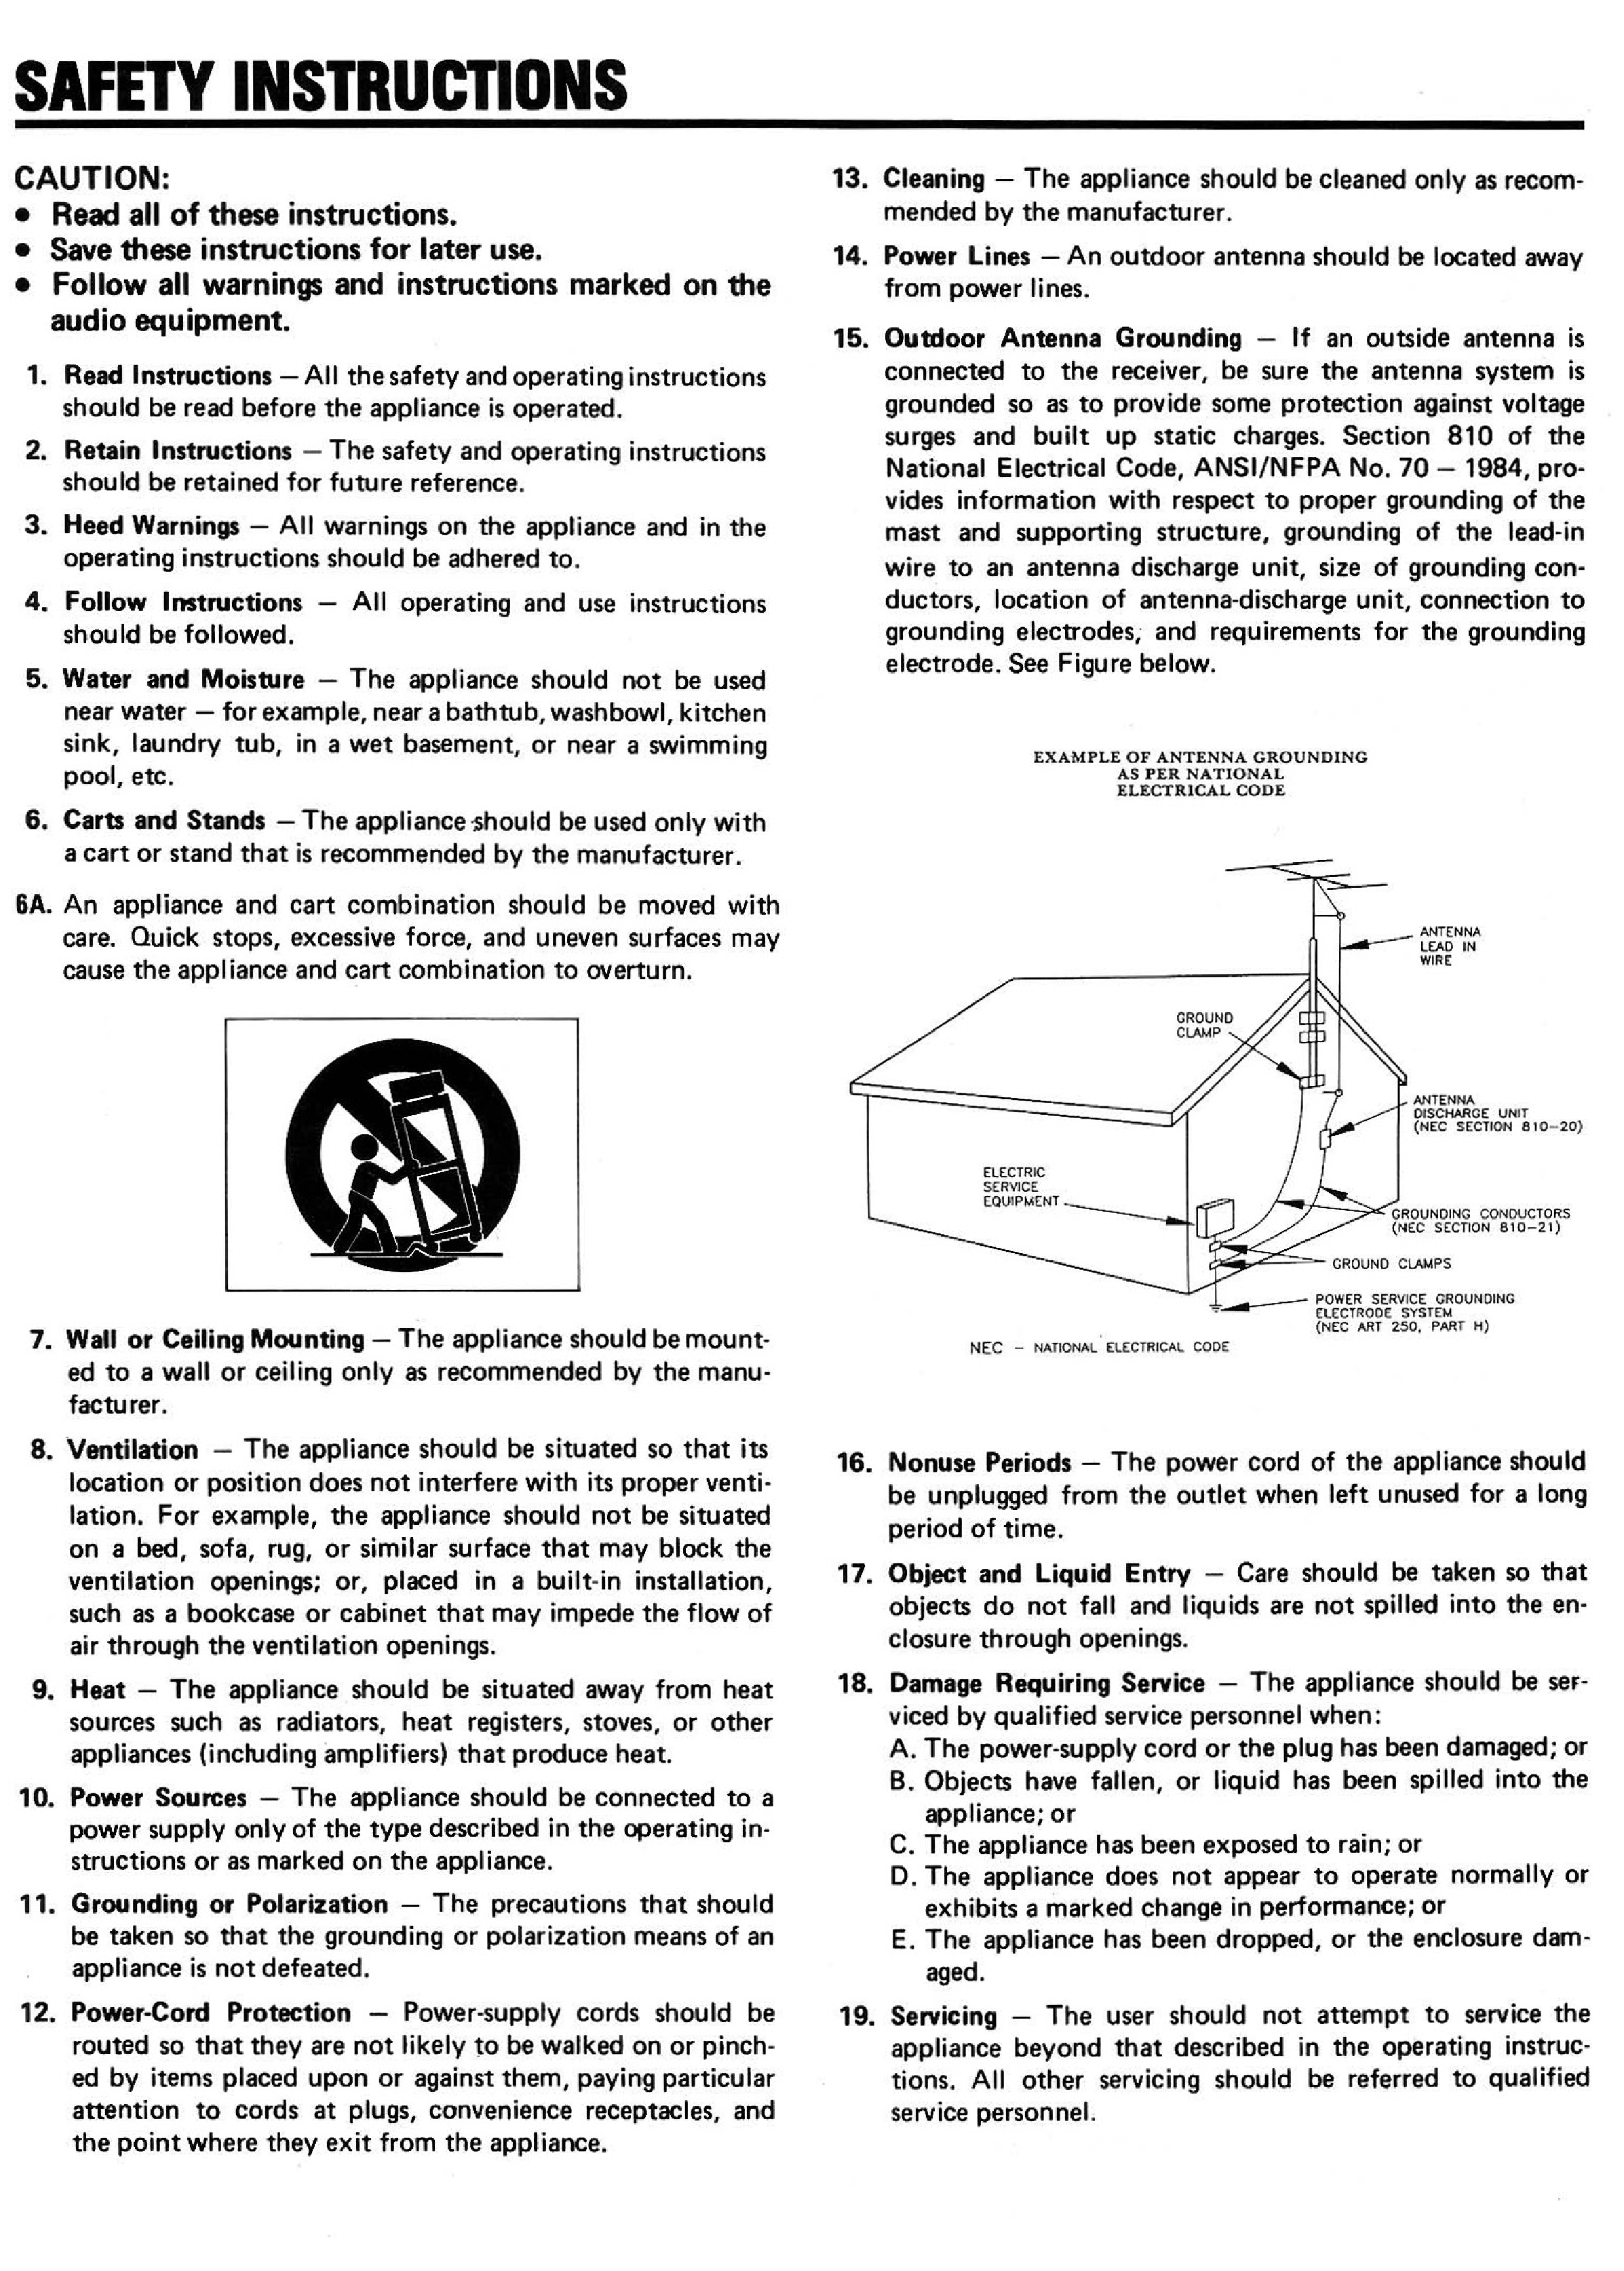 TEAC AG-550 - Owner's Manual Immediate Download